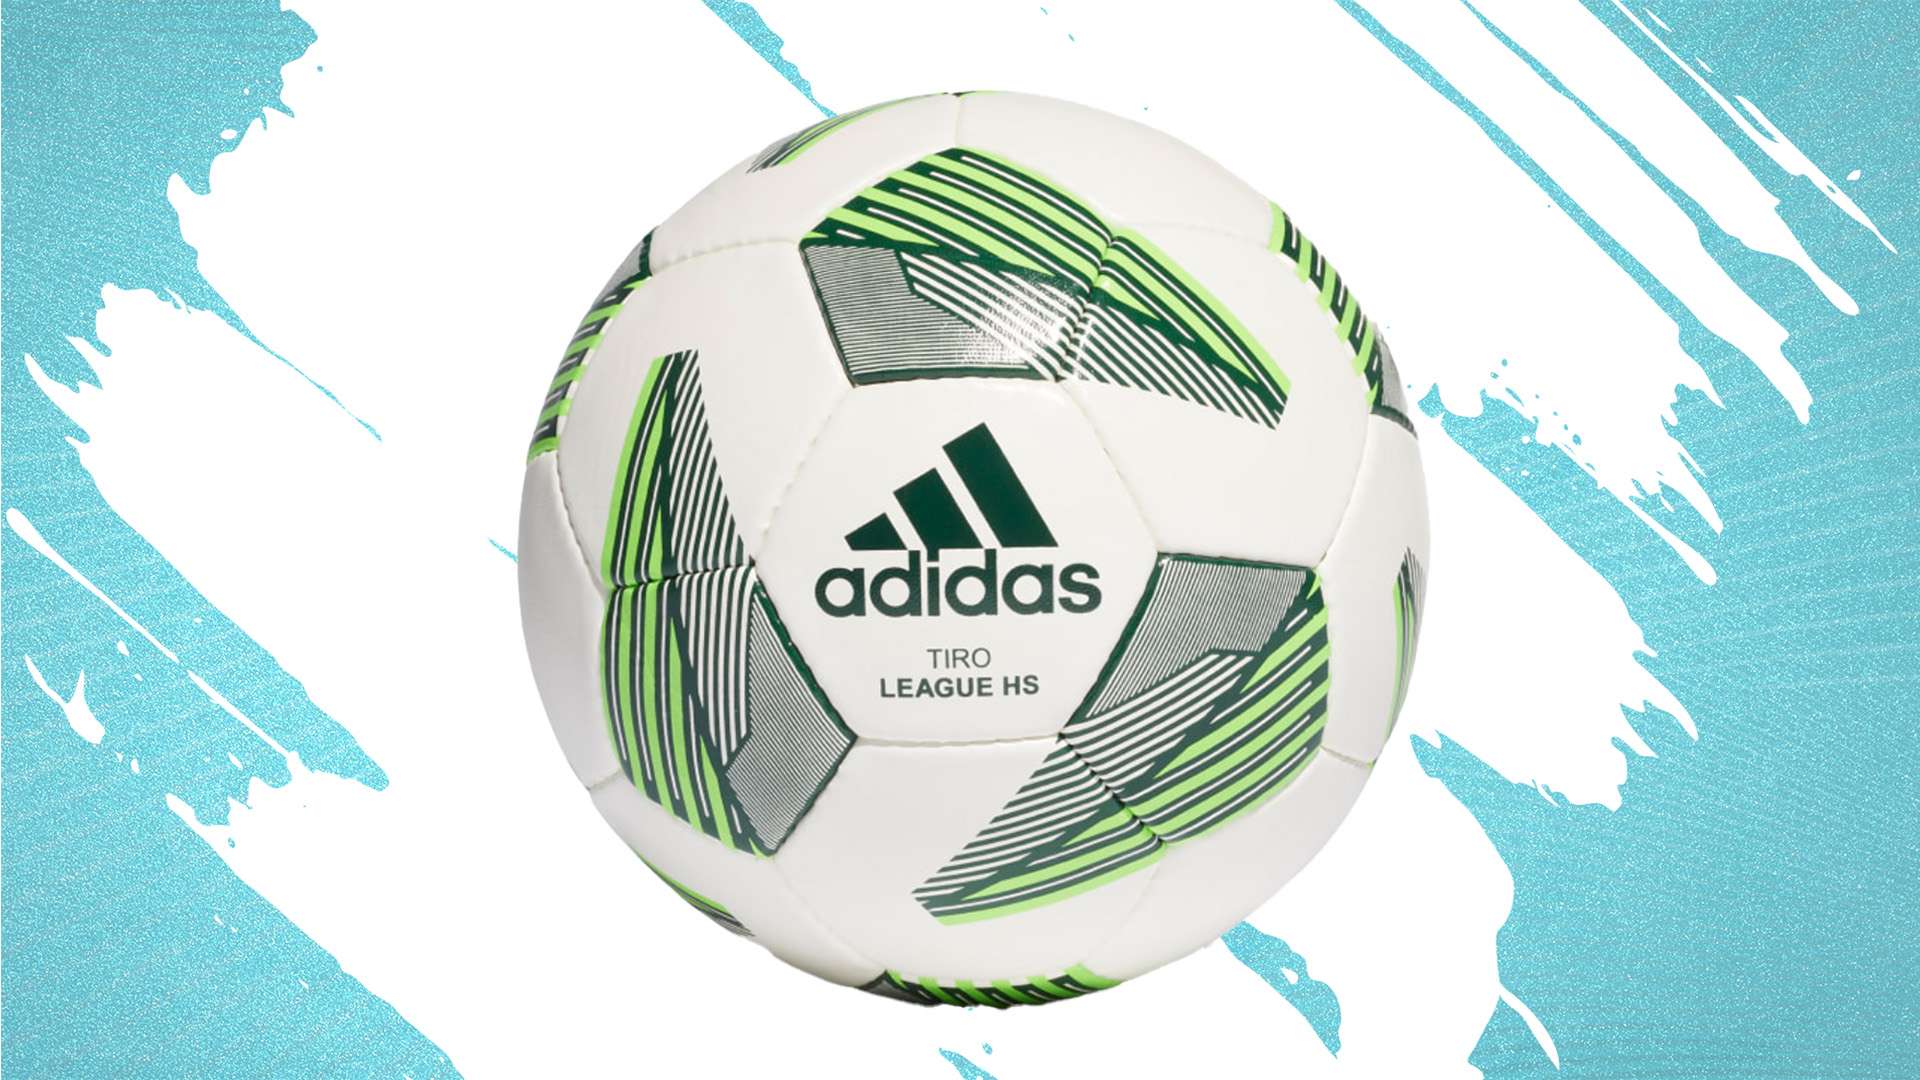 Adidas Tiro Match ball 